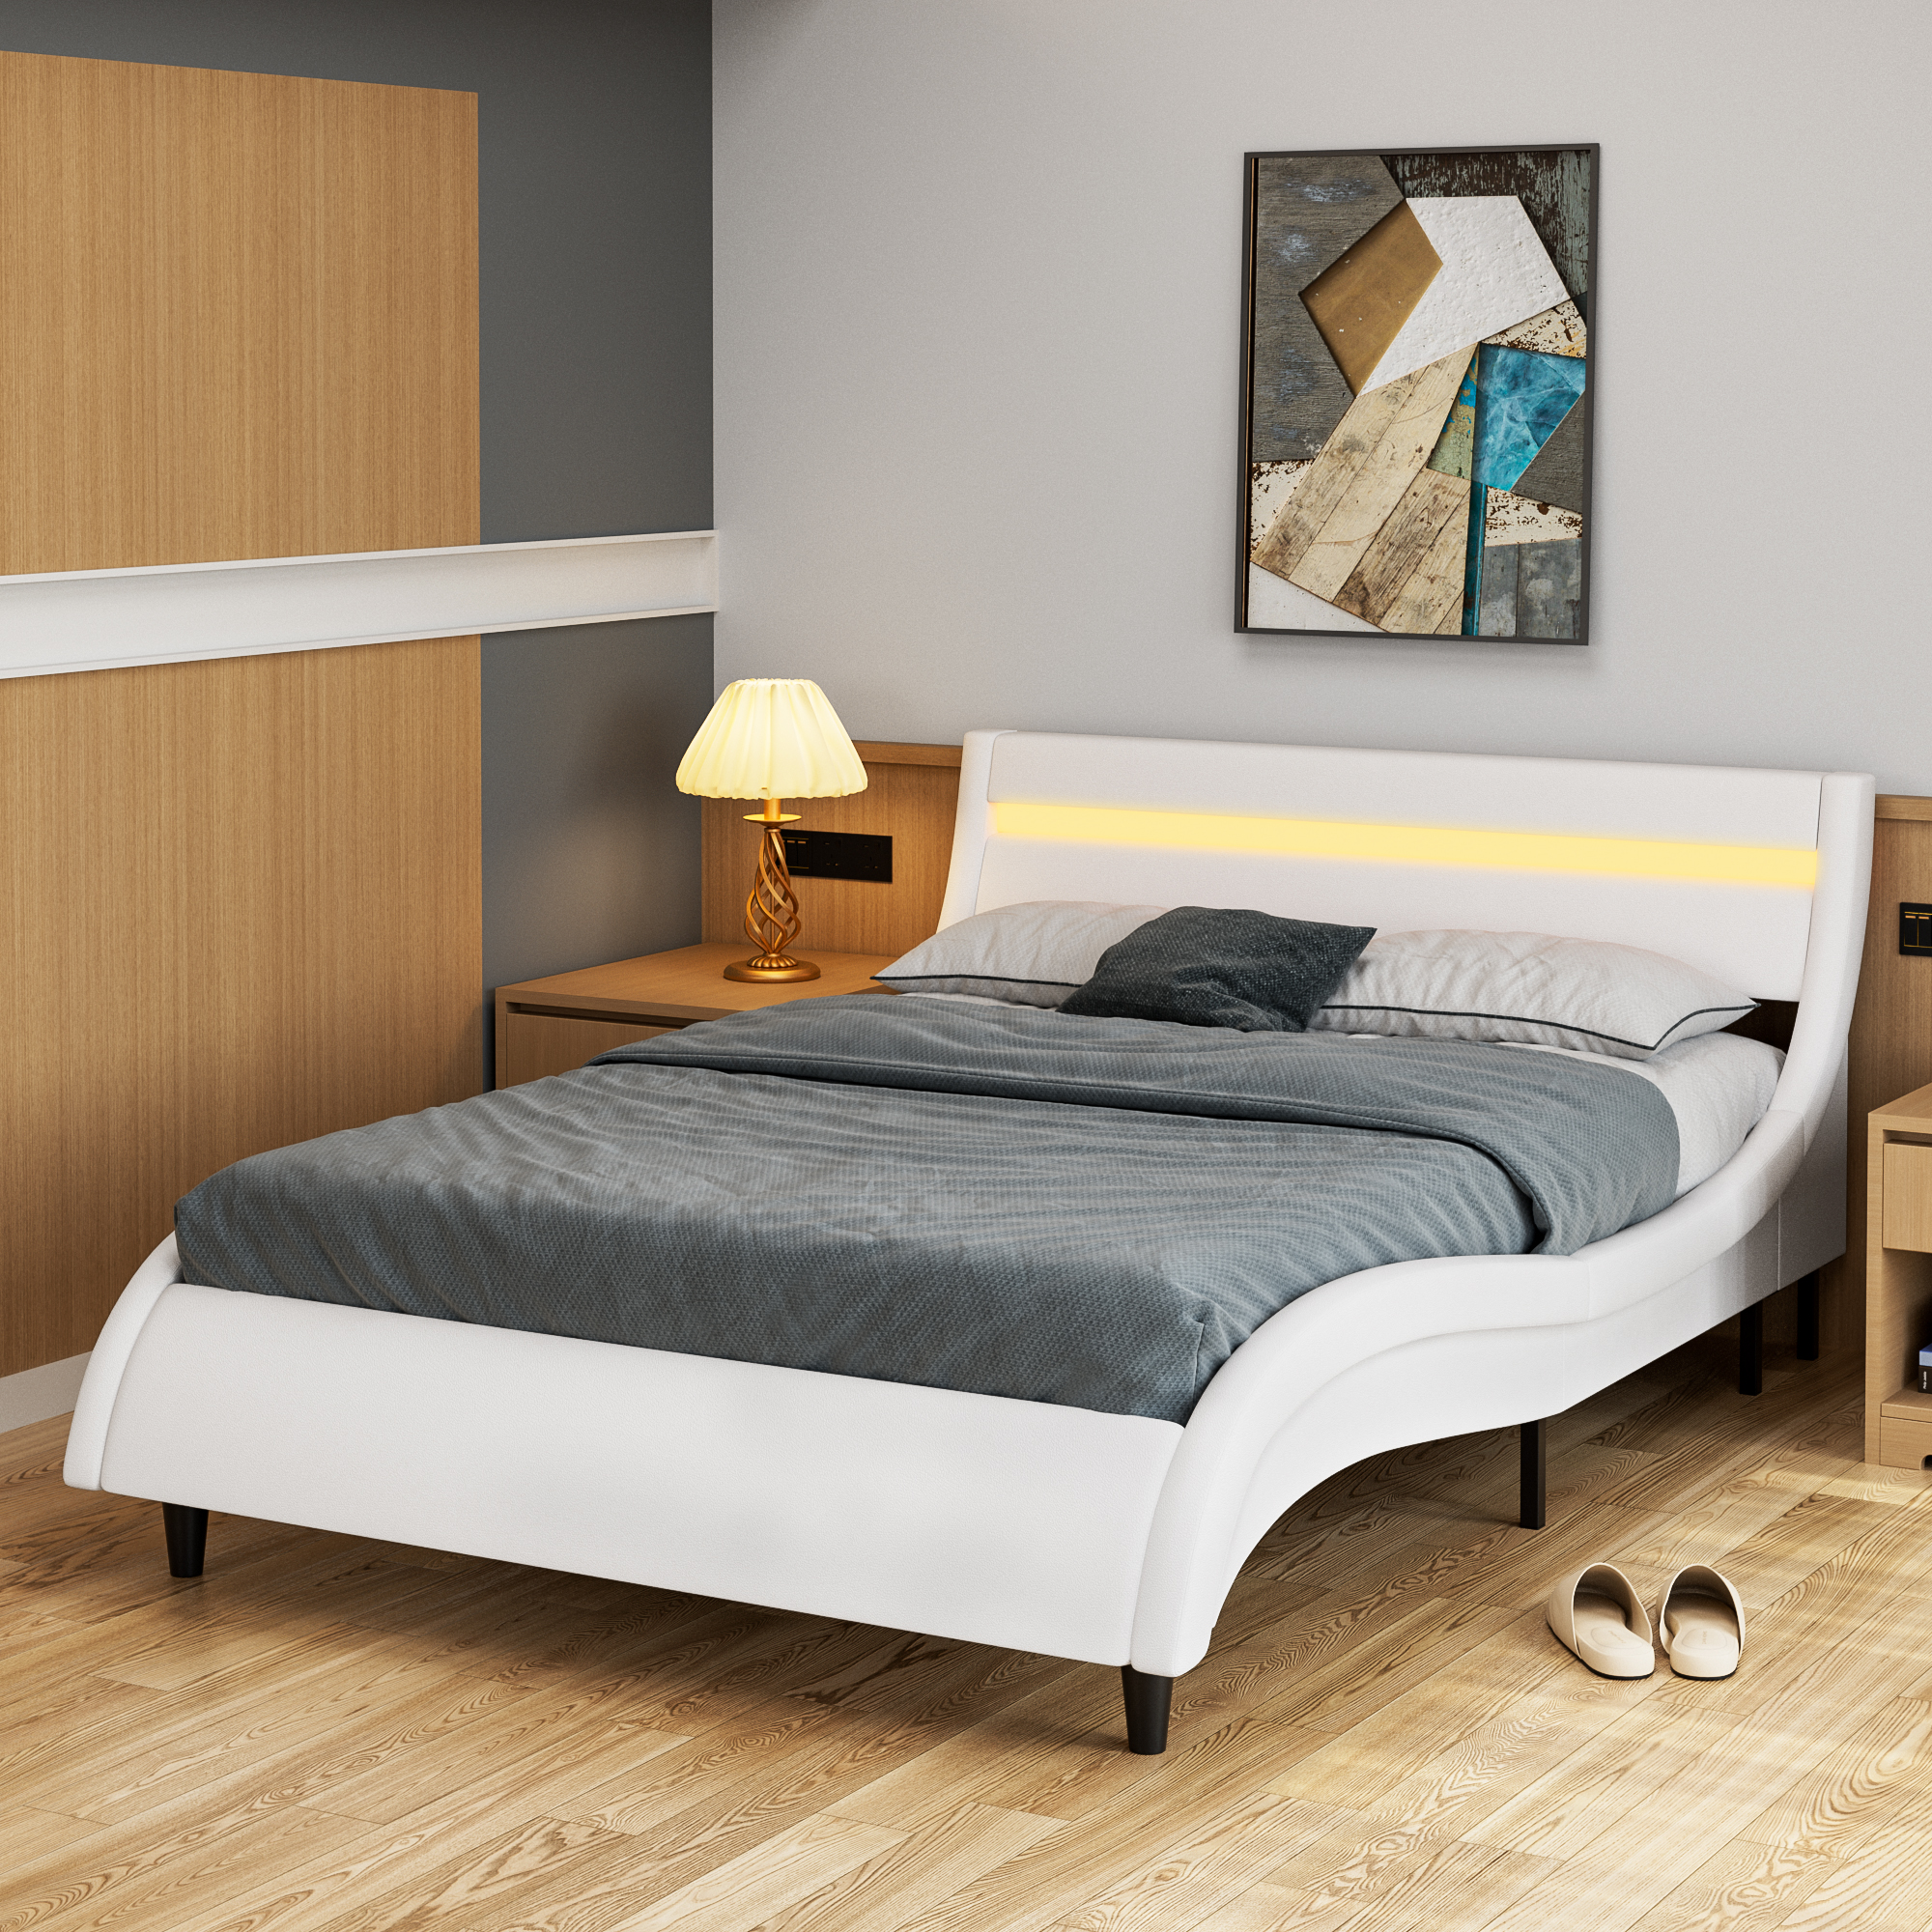 Homfa Full Size Bed Frame, 16 Colors Led Wooden Platform Bed Frame with Adjustable Upholstered Headboard, White - image 5 of 8